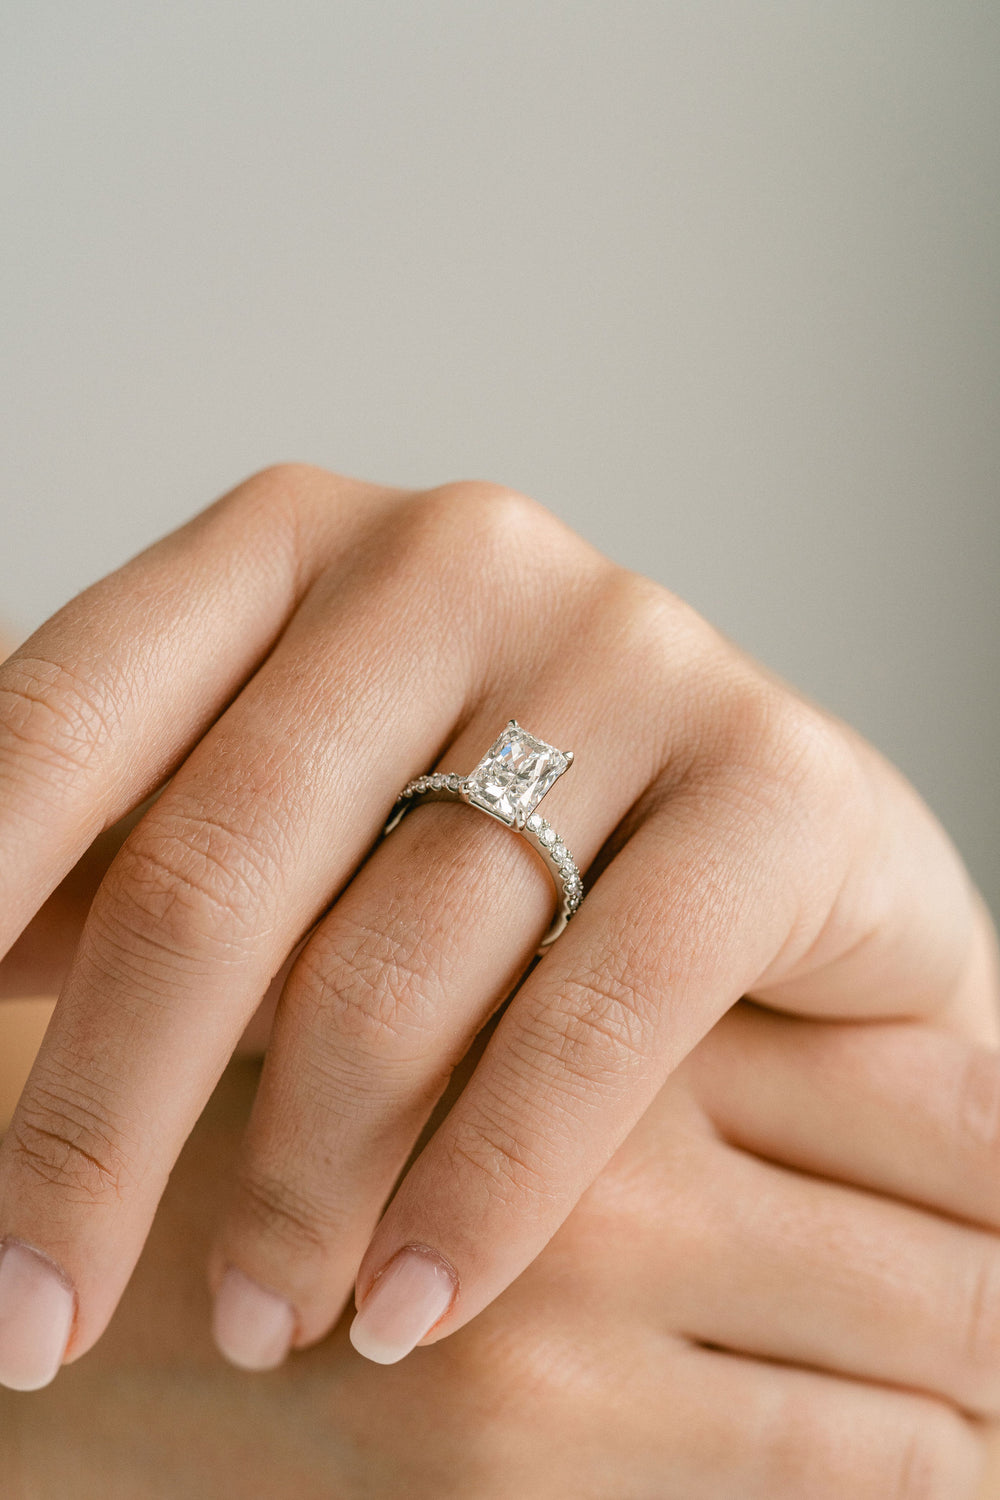 Radiant Cut Diamond Engagement Ring With Diamond Pavé Band, 14k White Gold